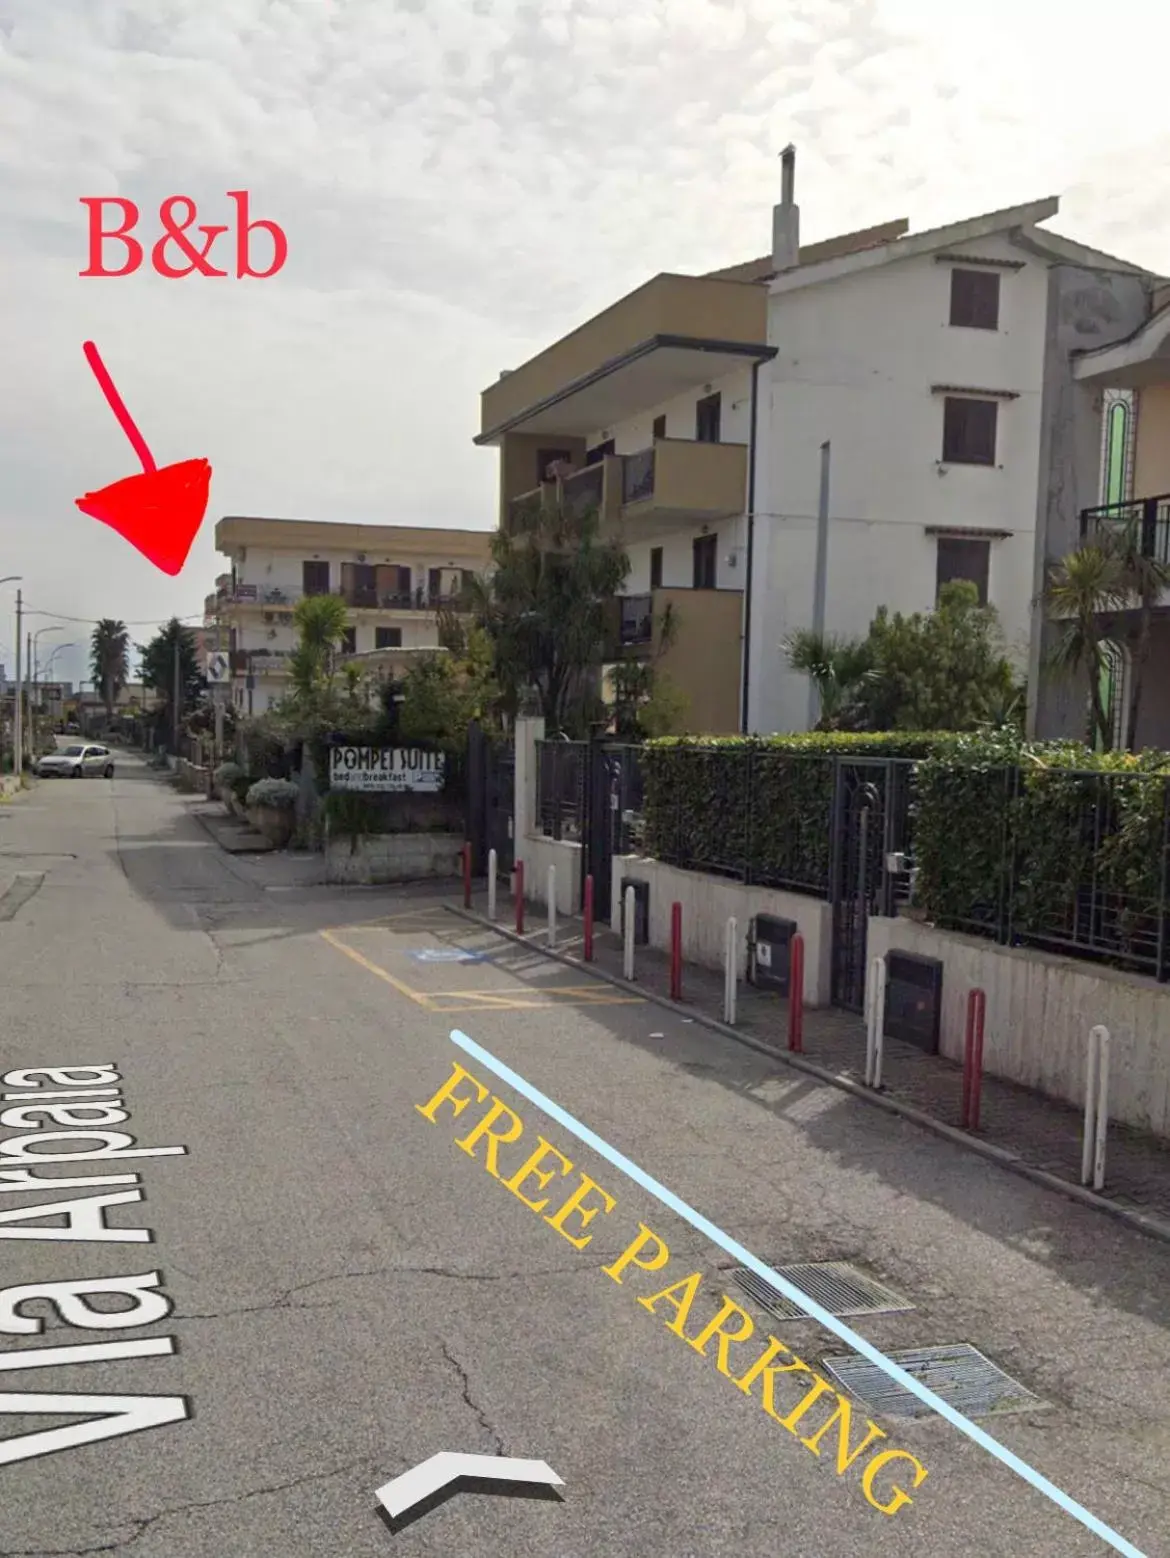 Parking, Property Building in B&b Pompei Window